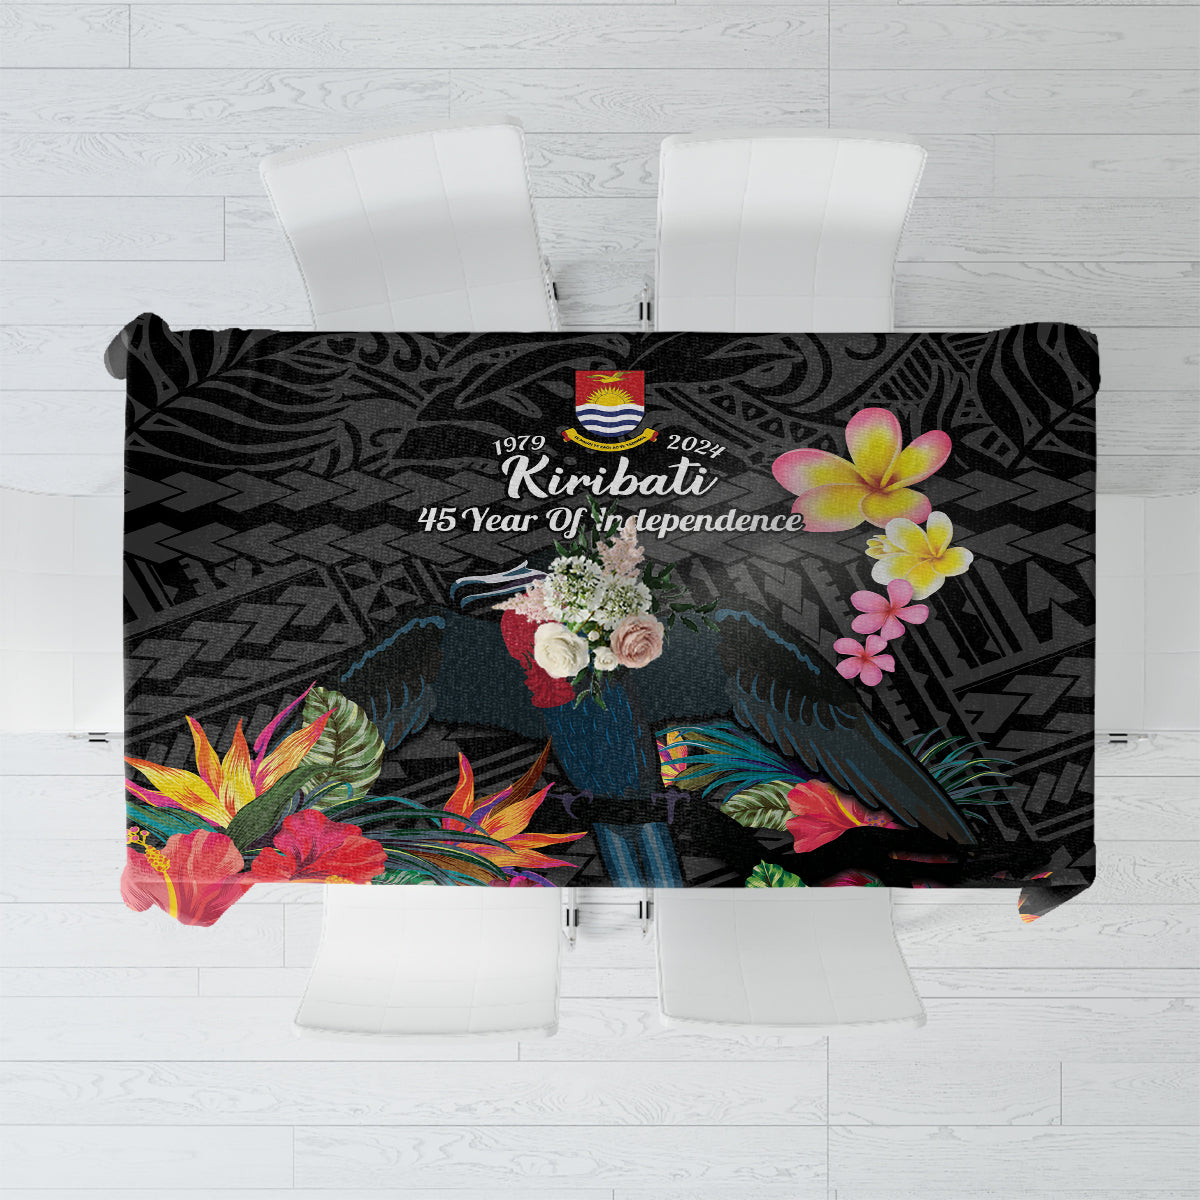 Kiribati Independence Day Tablecloth Frigatebird Mix Tropical Flowers - Black Style